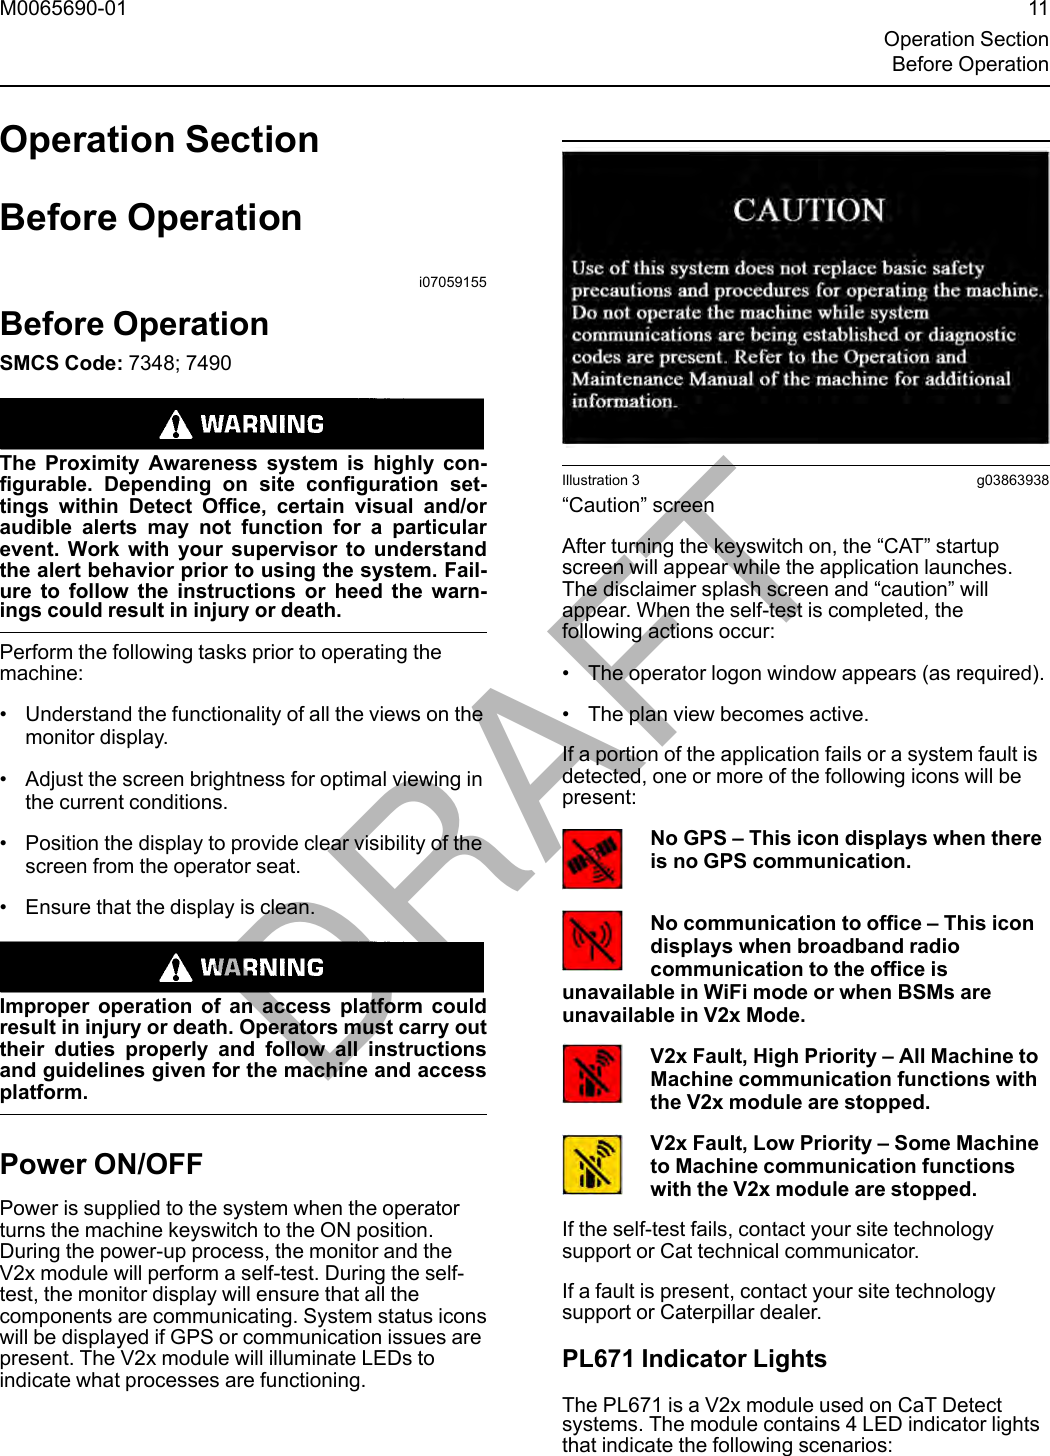 Page 11 of Caterpillar PL671 Digital Transmission System User Manual 